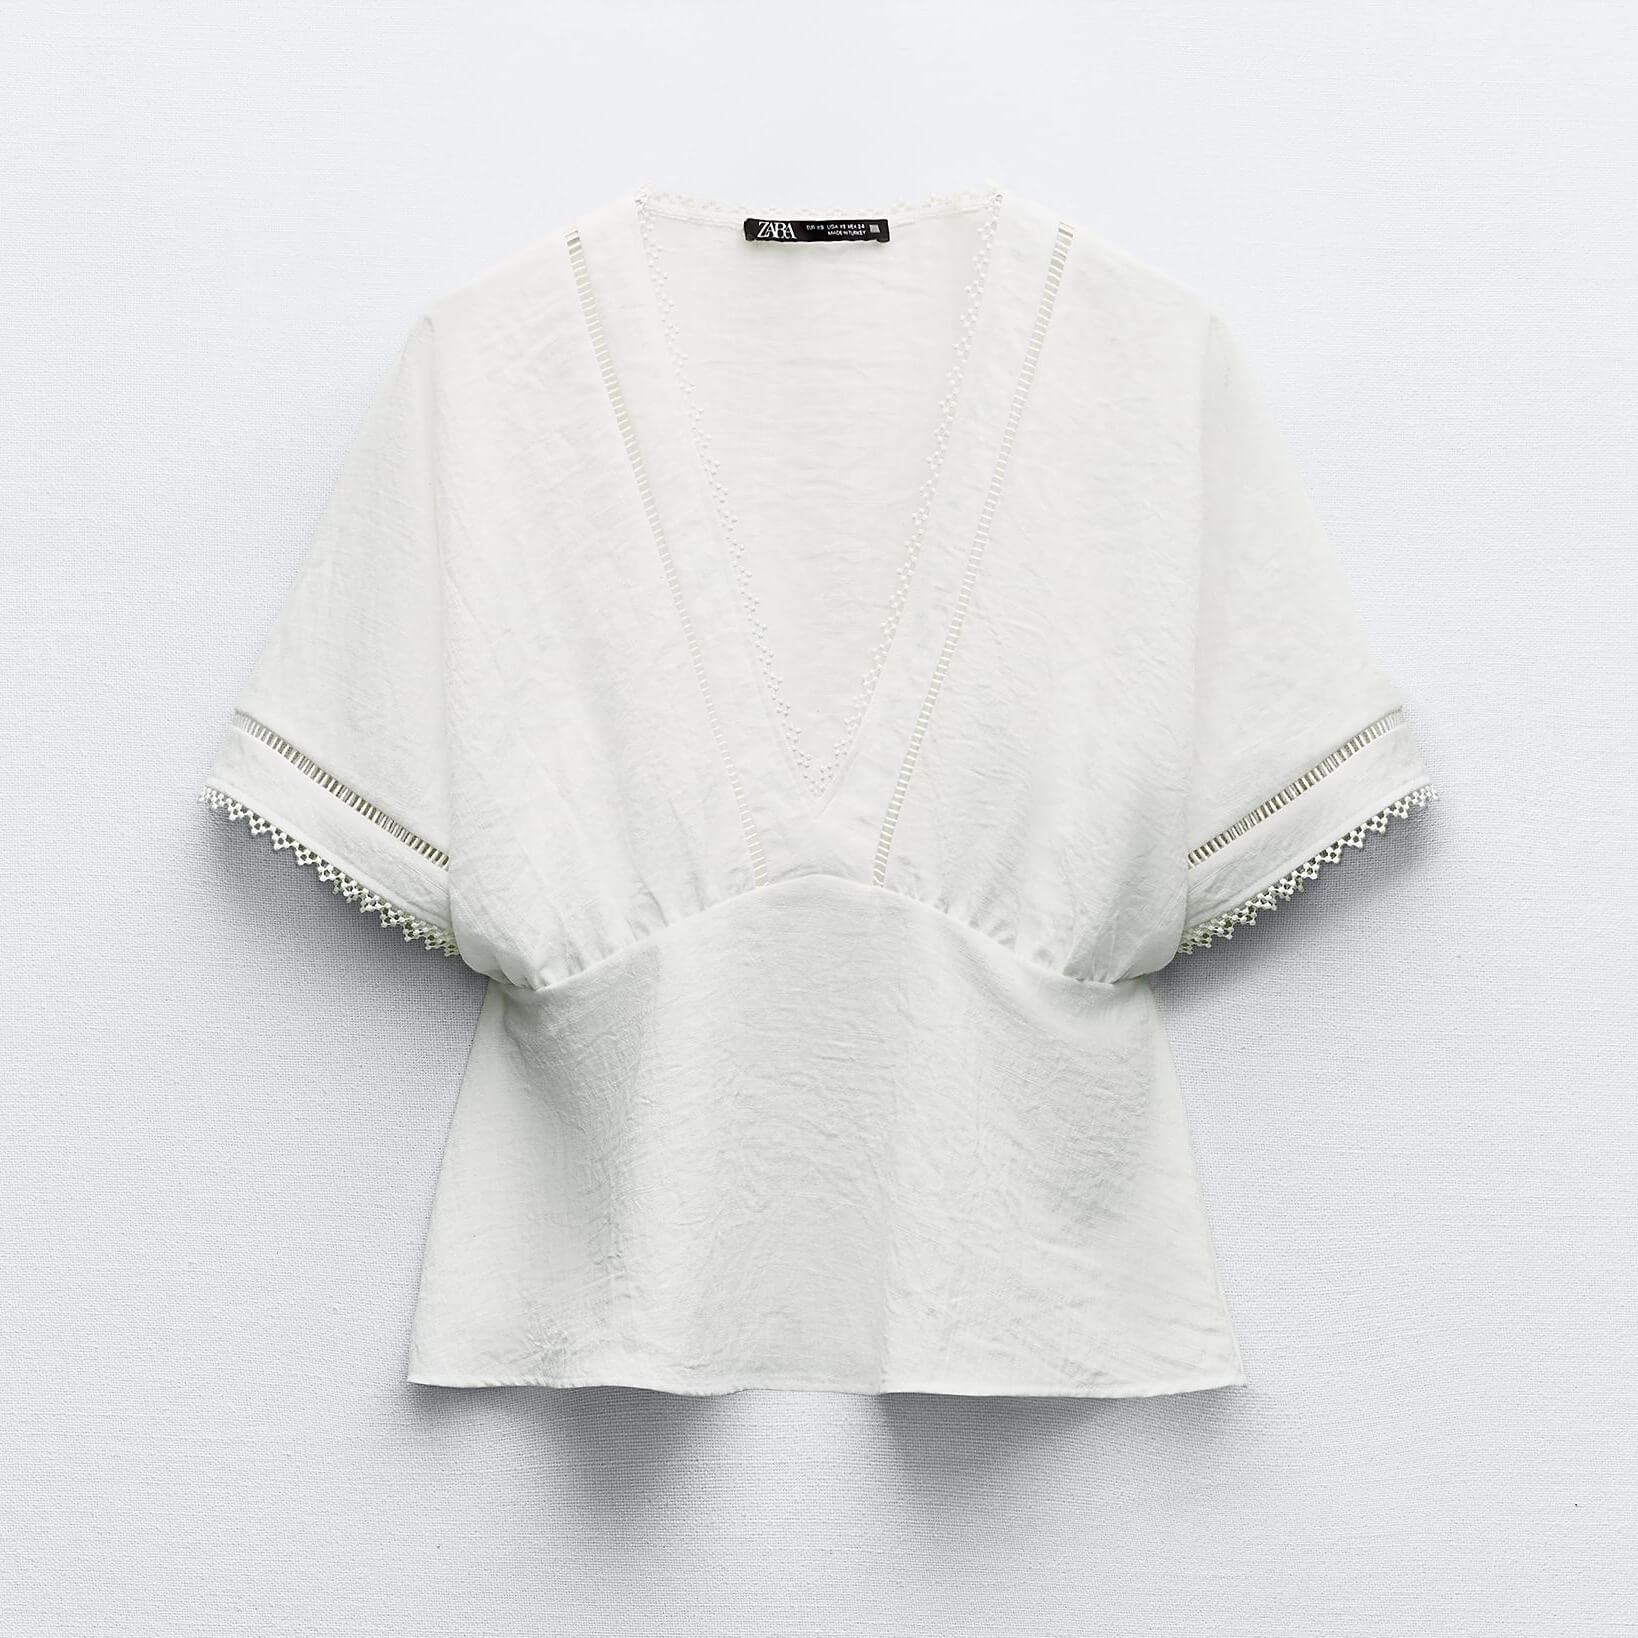 Топ Zara Wide Sleeve With Lace Trims, белый топ zara ruffled with contrast trims экрю